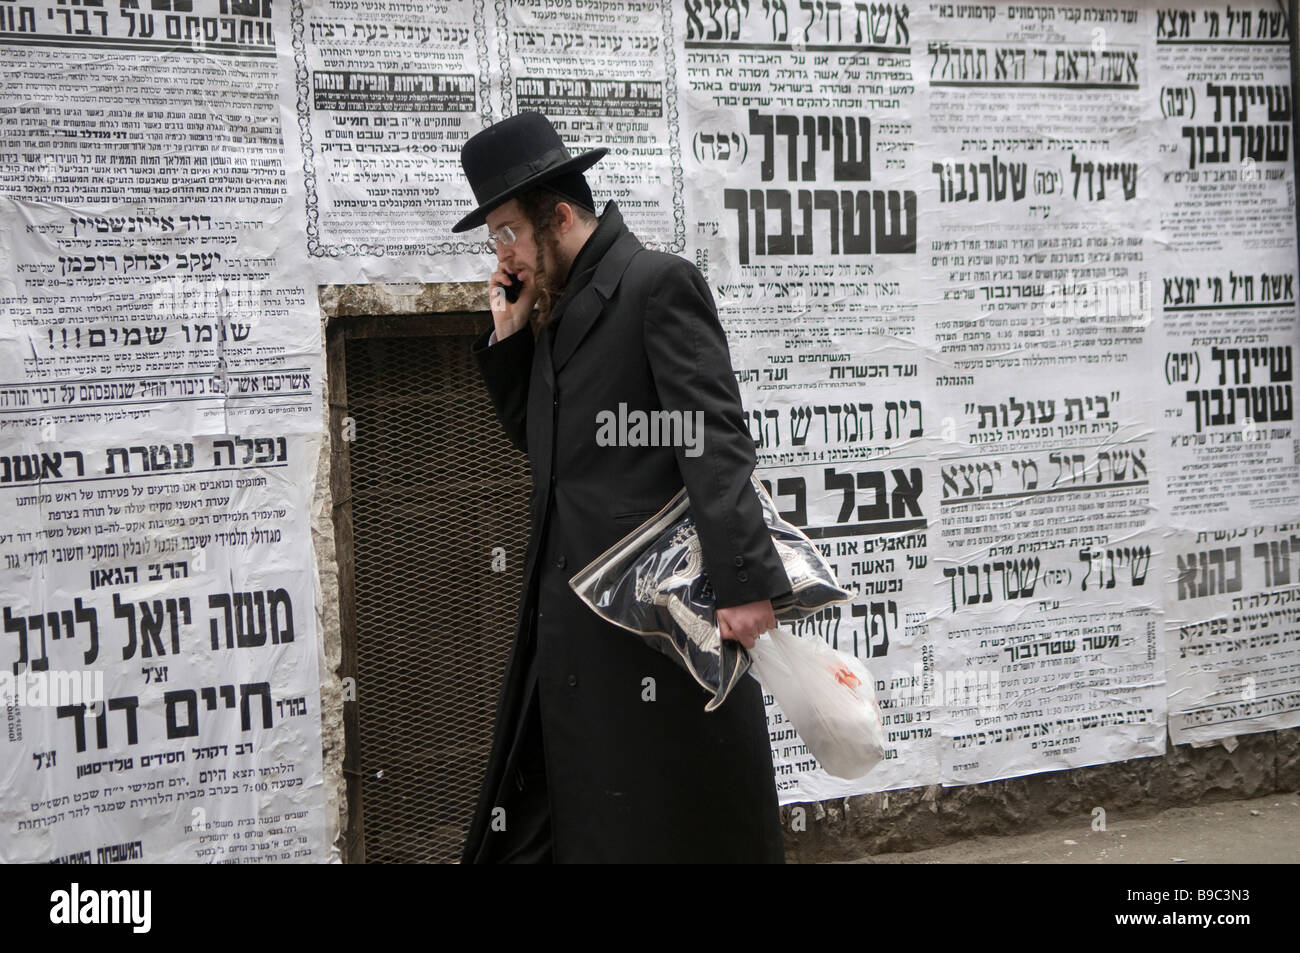 Orthodox Jew walks past Pashkvilim broadside posters which serve as community announcements in Mea Shearim Haredi neighborhood in Jerusalem Israel Stock Photo